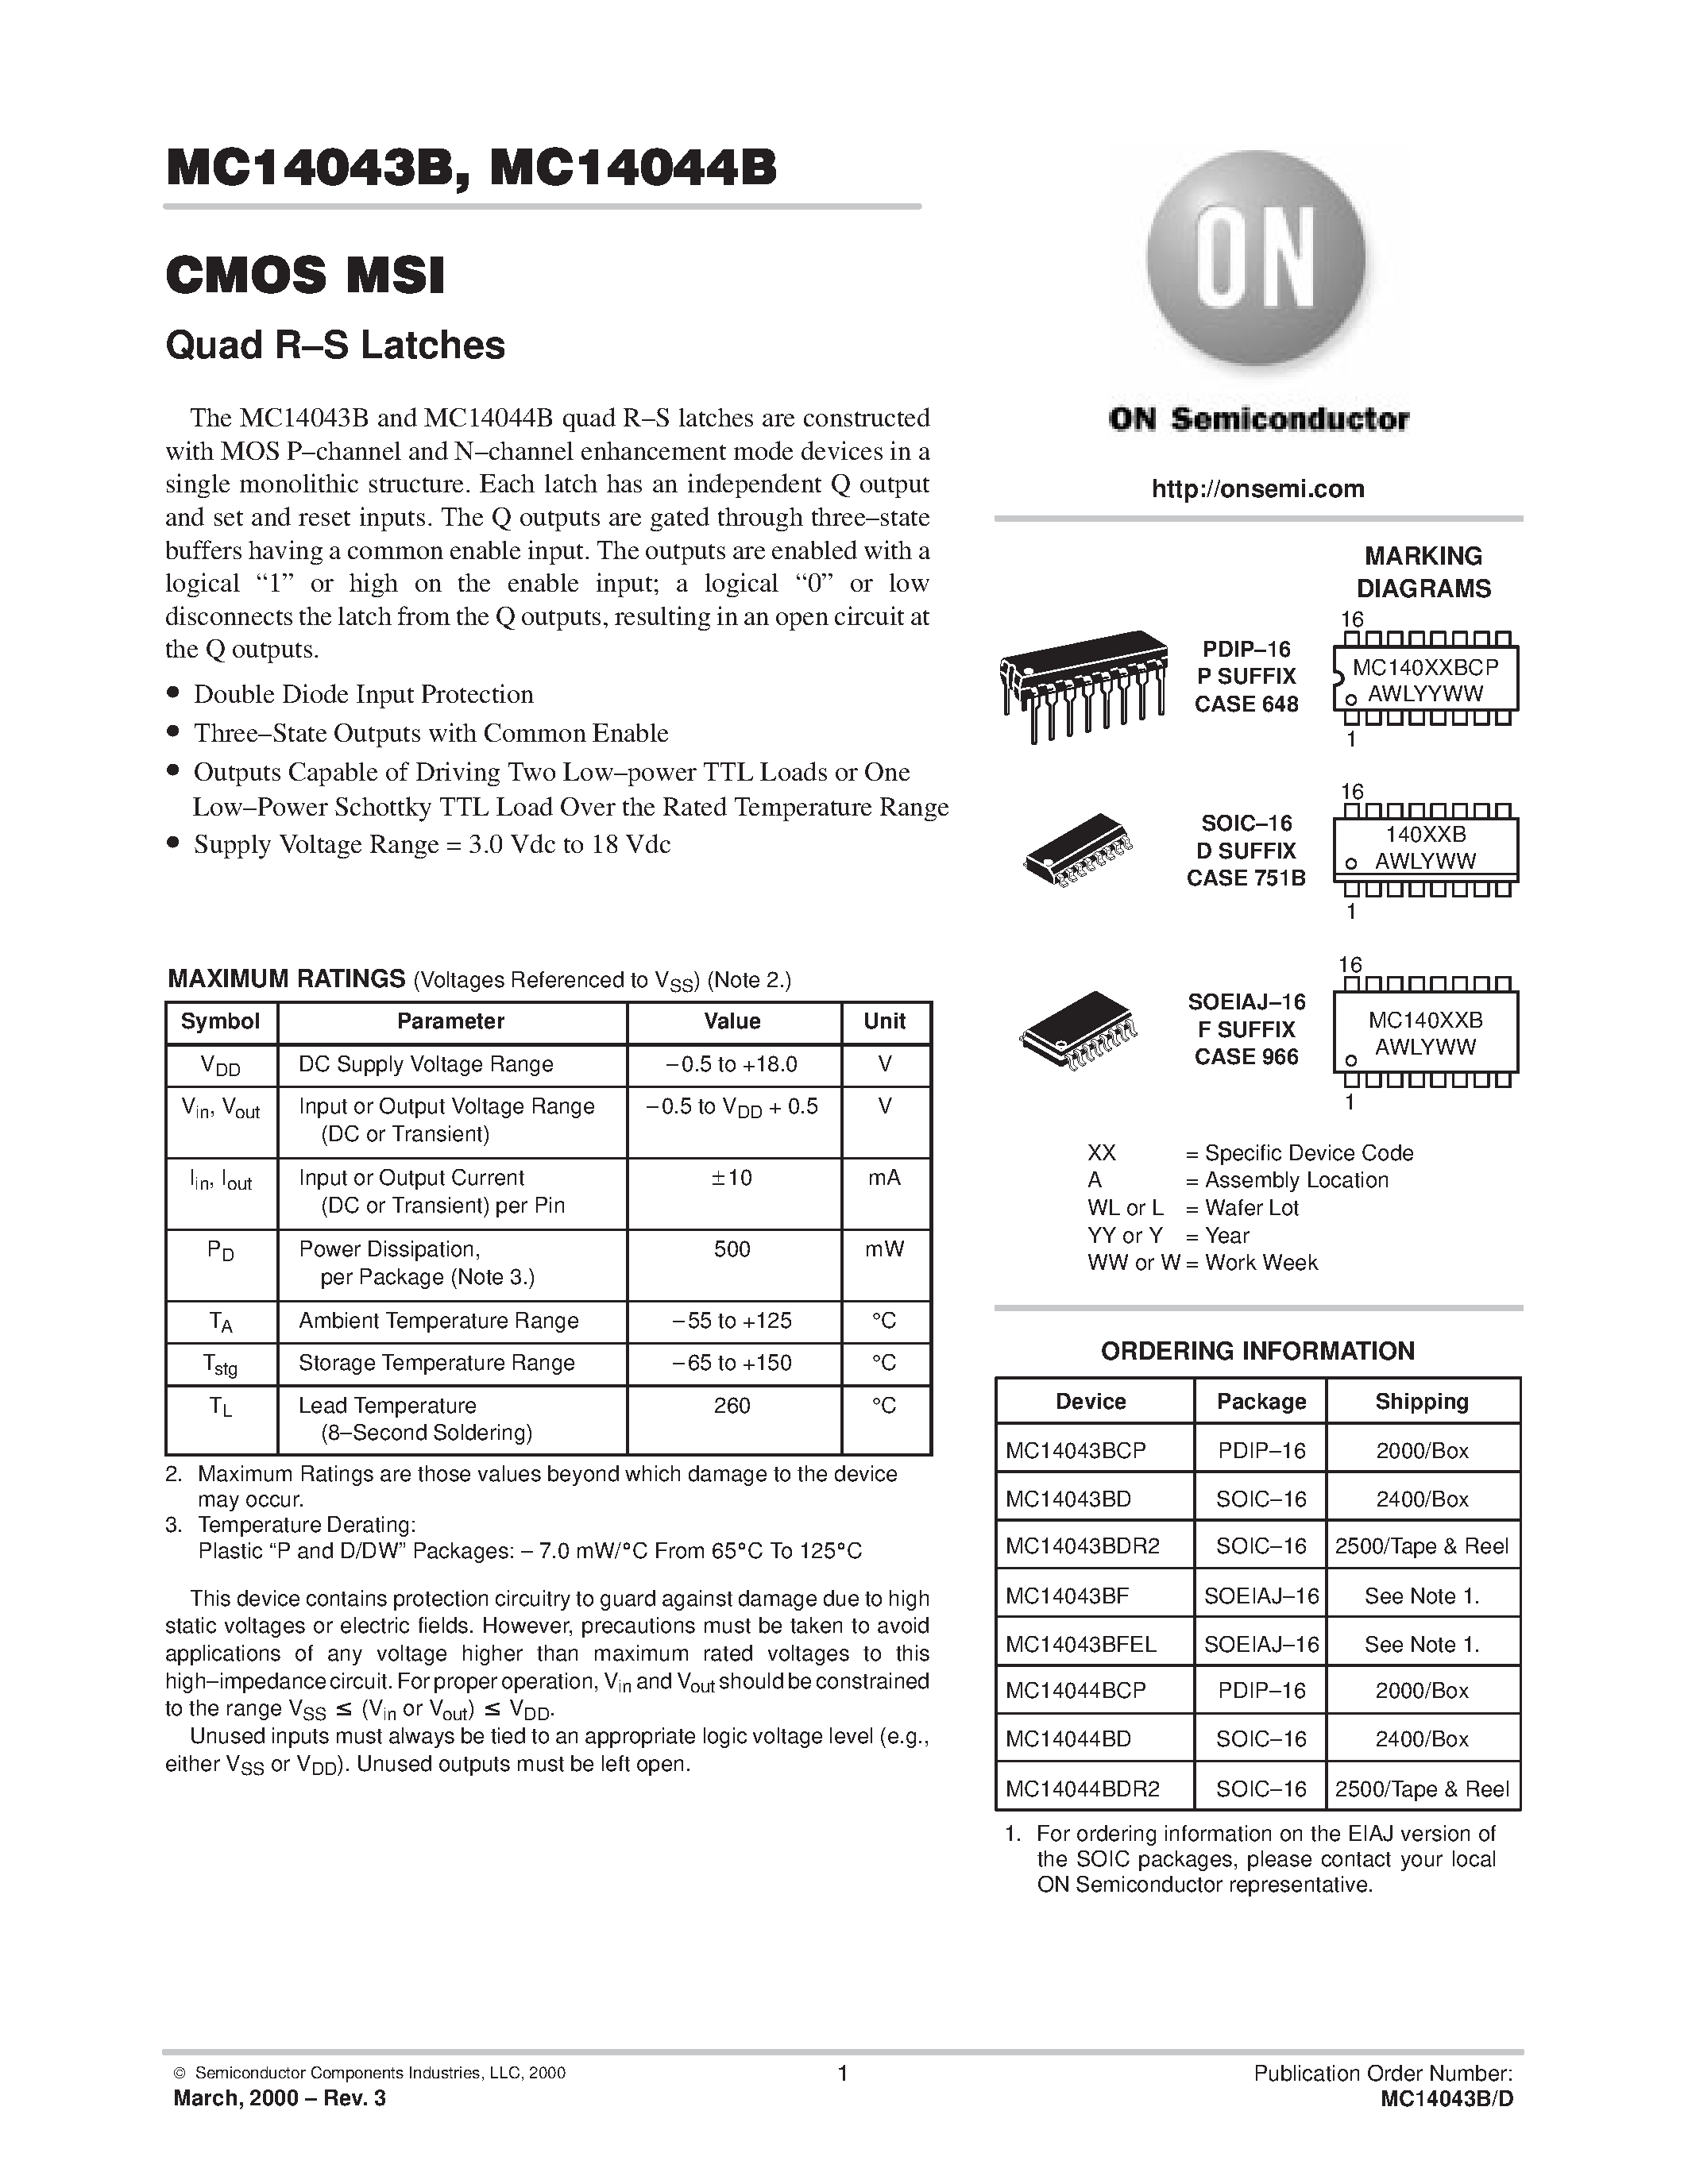 Datasheet MC14043B - CMOS MSI(Quad R-S Latches) page 1